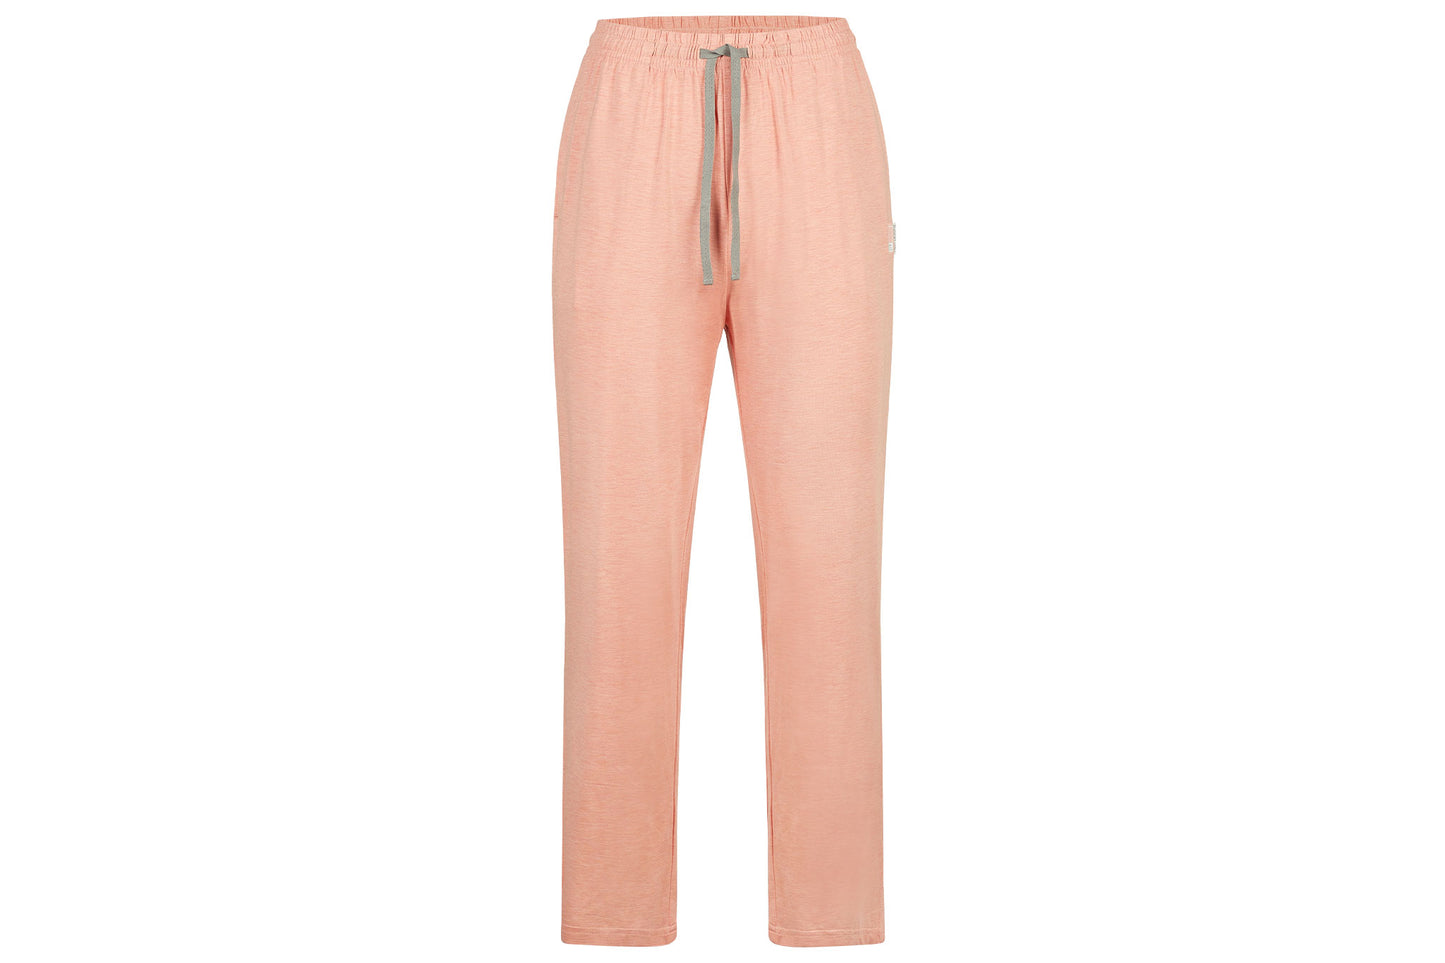 Women's Lounge Pants (Bamboo Jersey) - Pantone Coral Almond